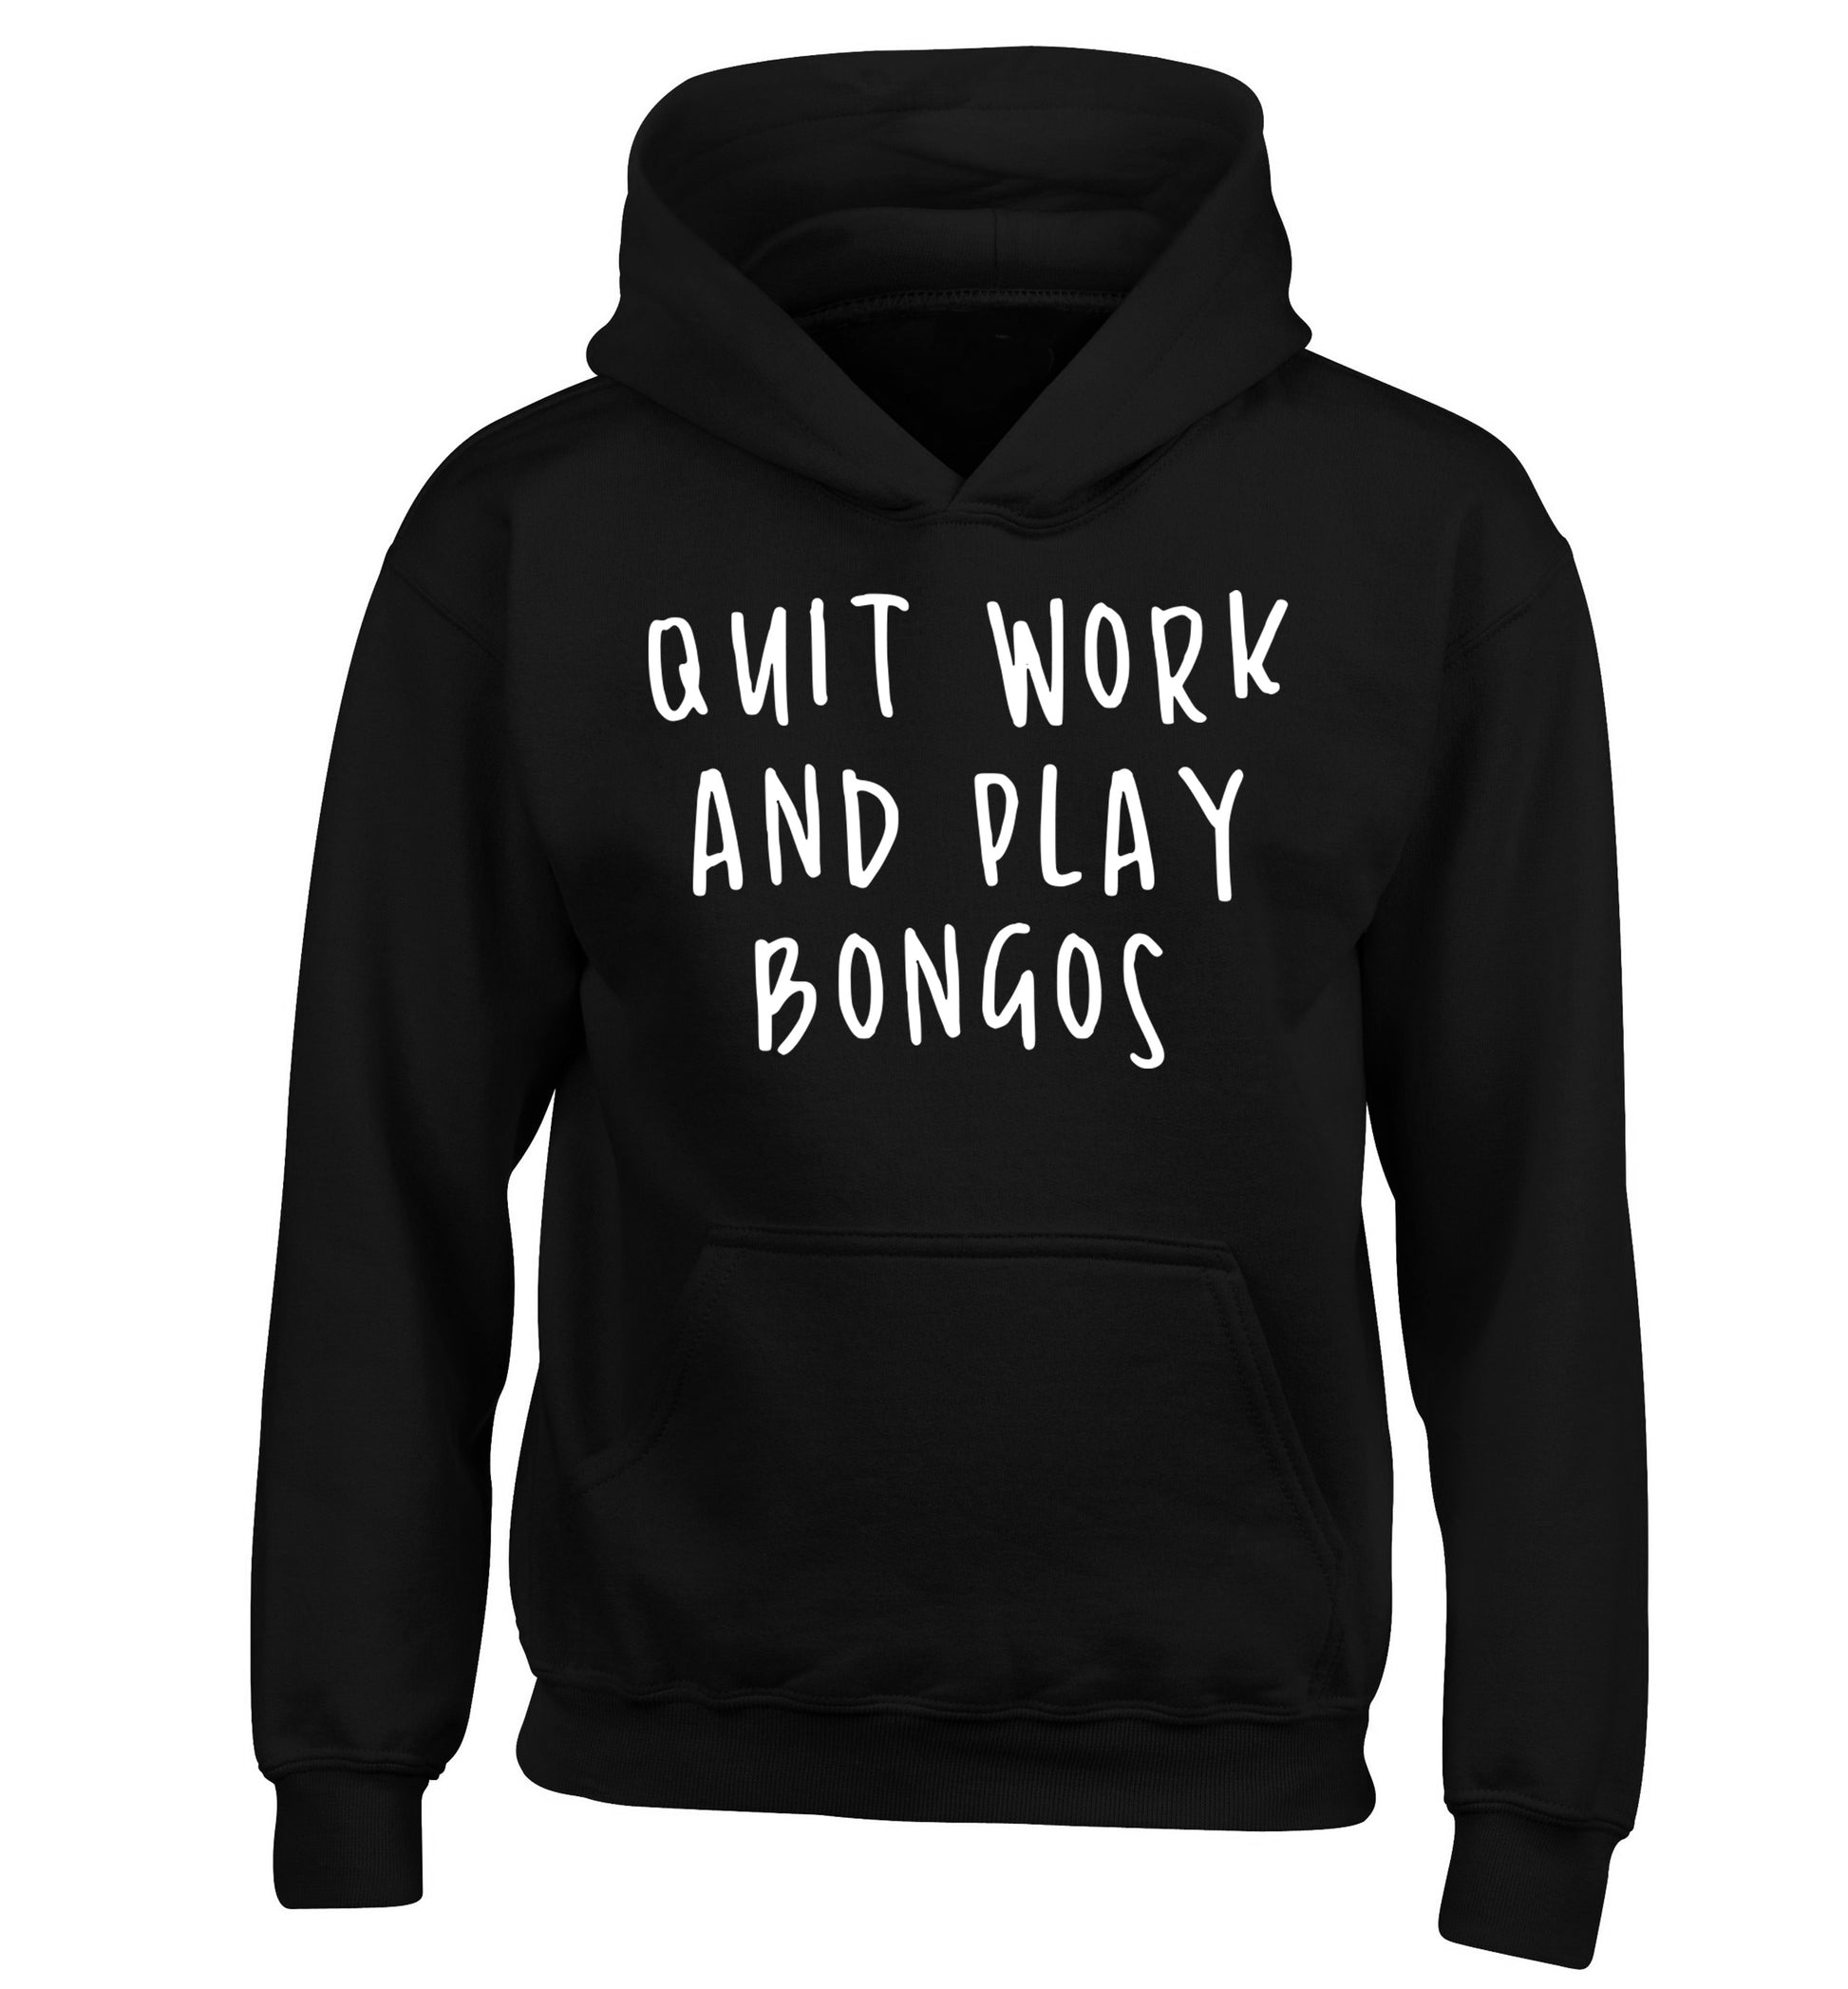 Quit work and play bongos children's black hoodie 12-14 Years